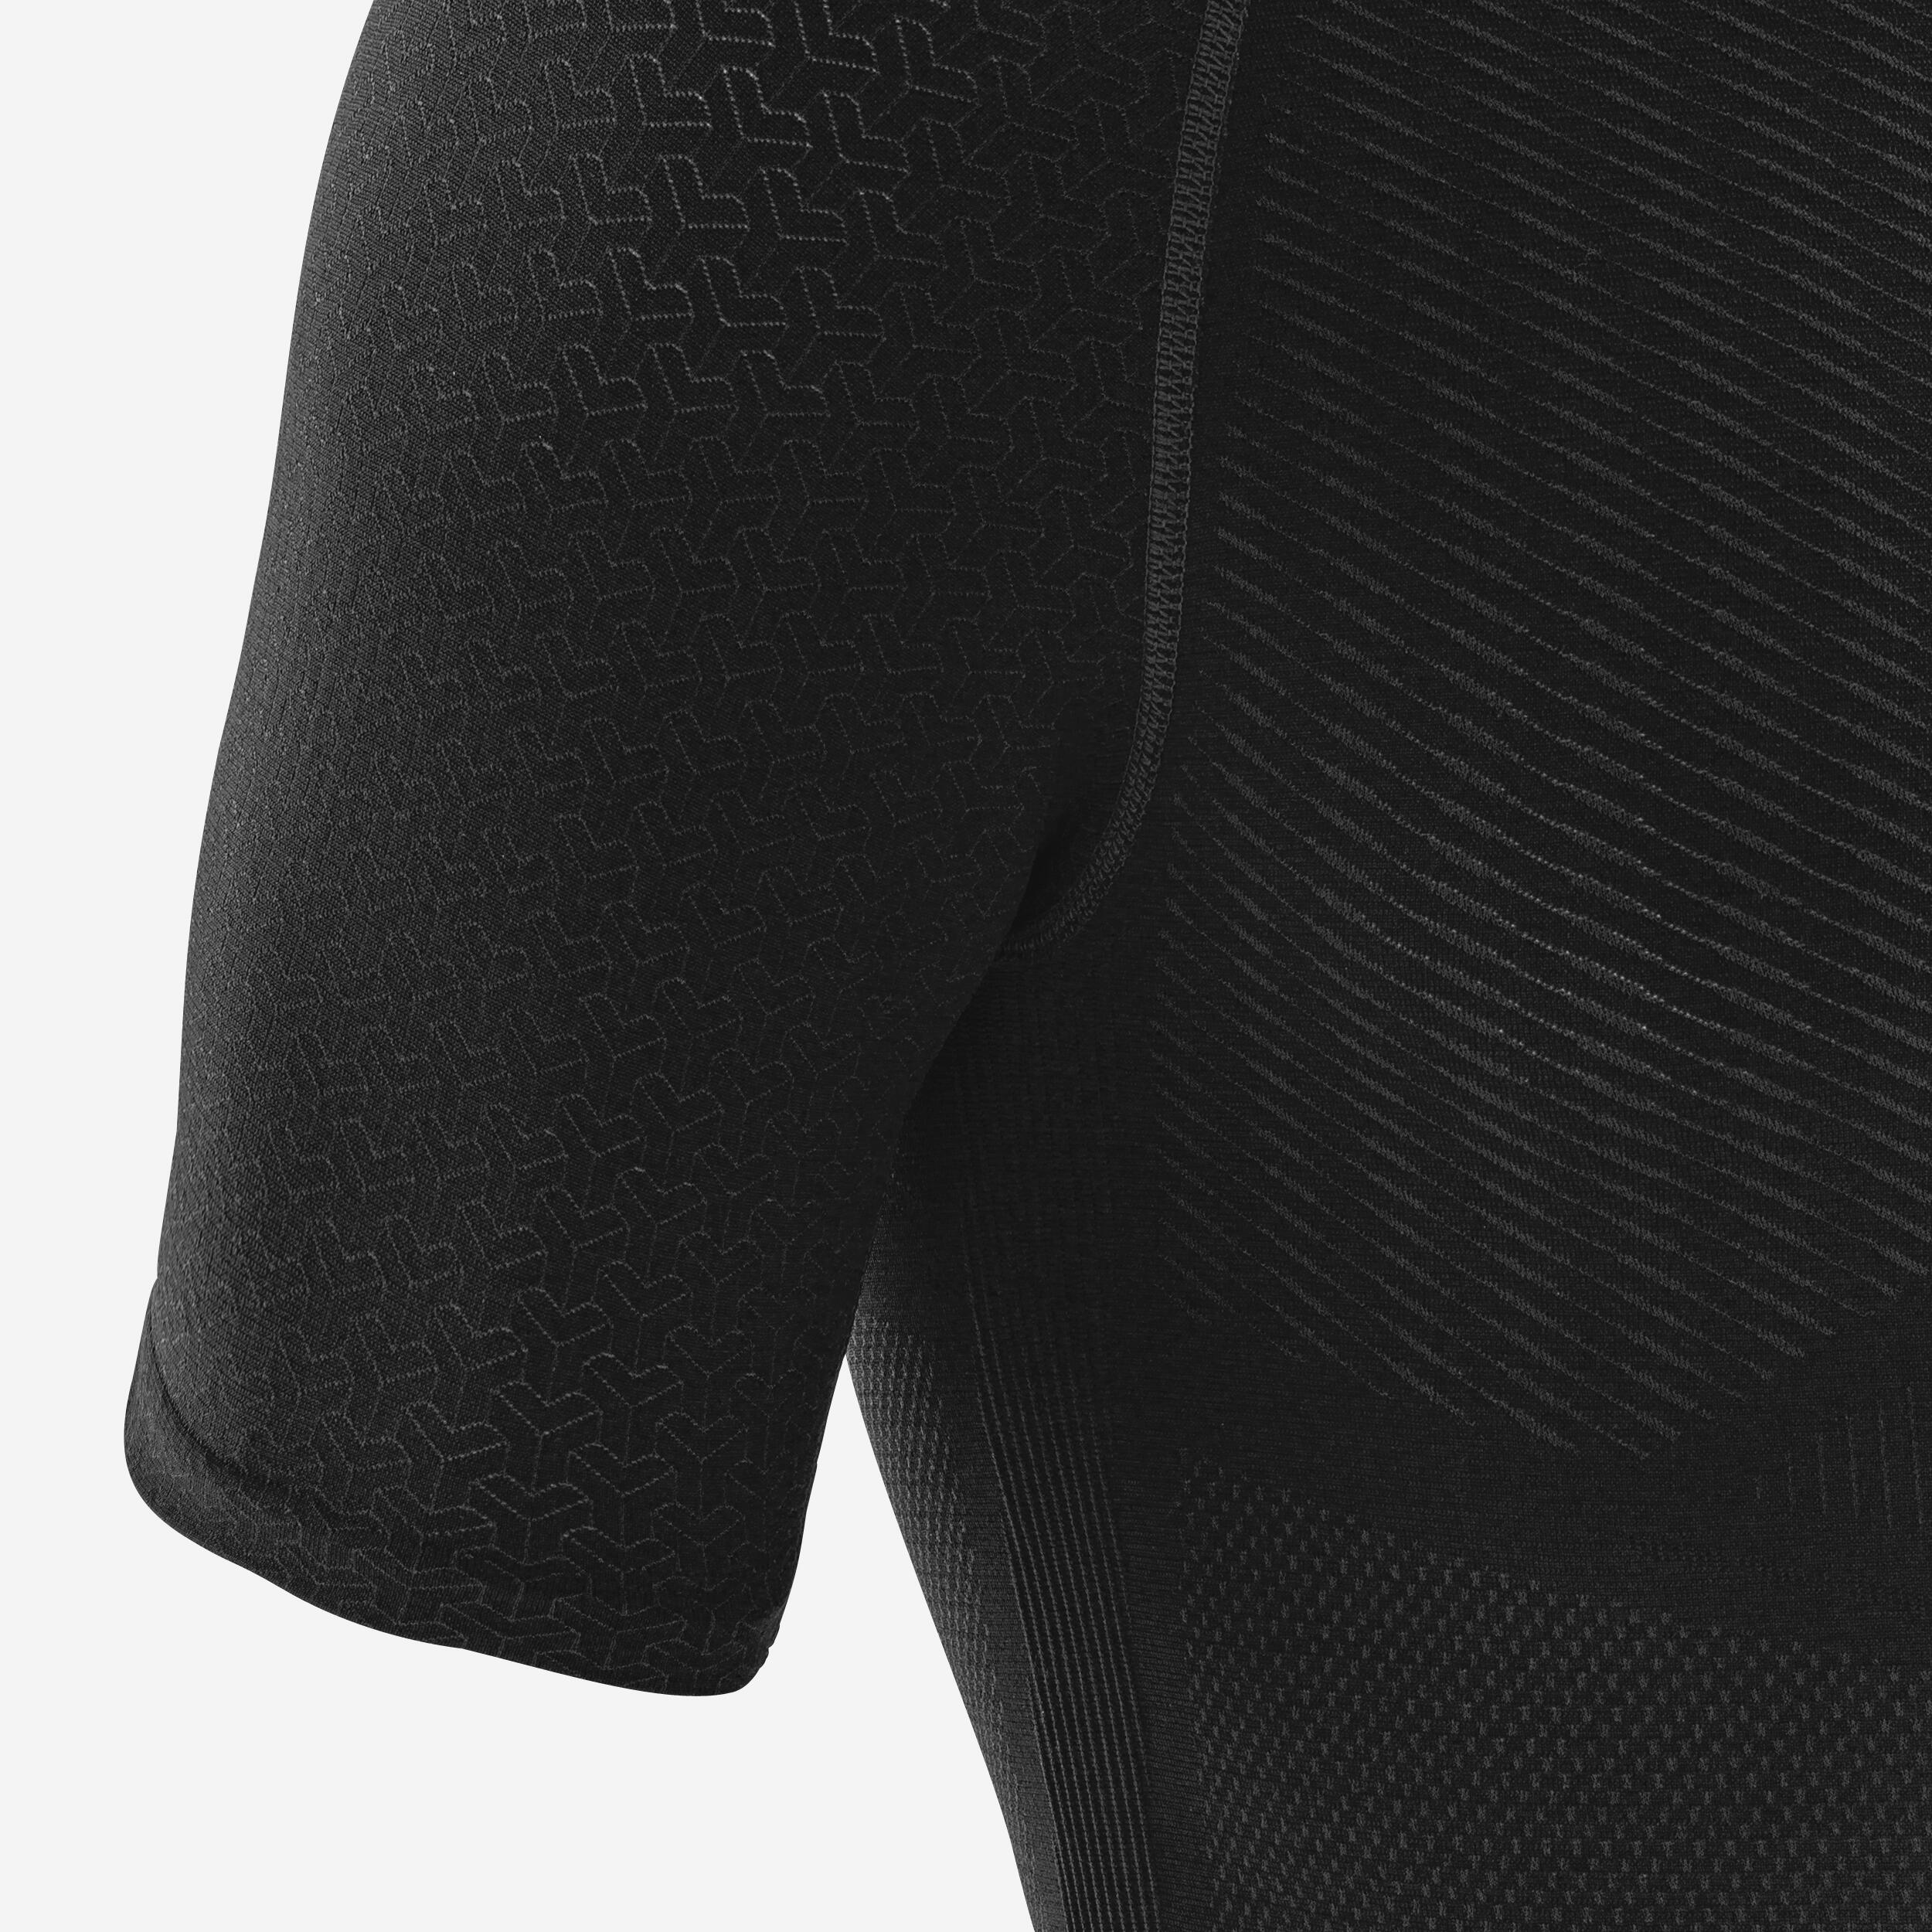 Men's Short-Sleeved Thermal Base Layer Top - Keepdry 500 Black